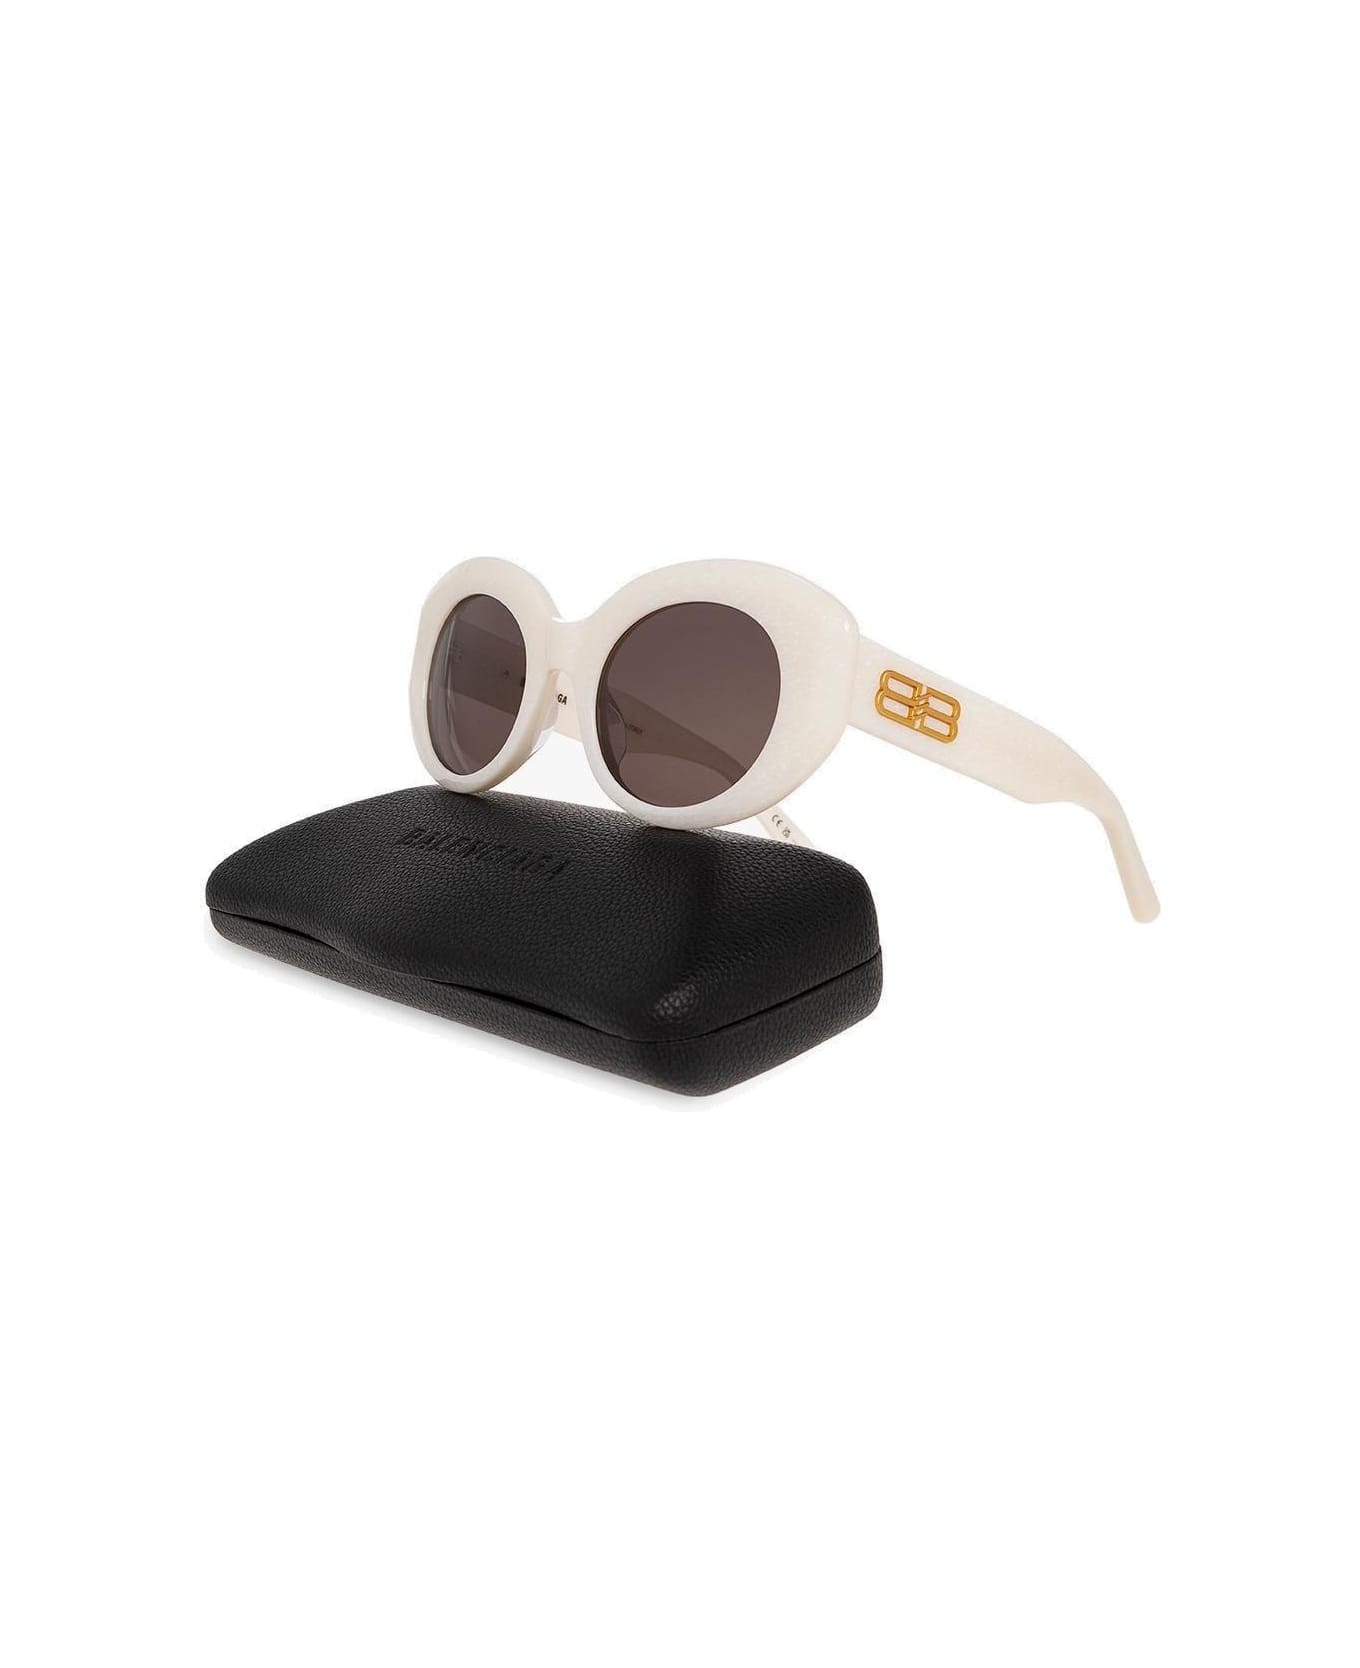 Balenciaga Round Frame Sunglasses - White